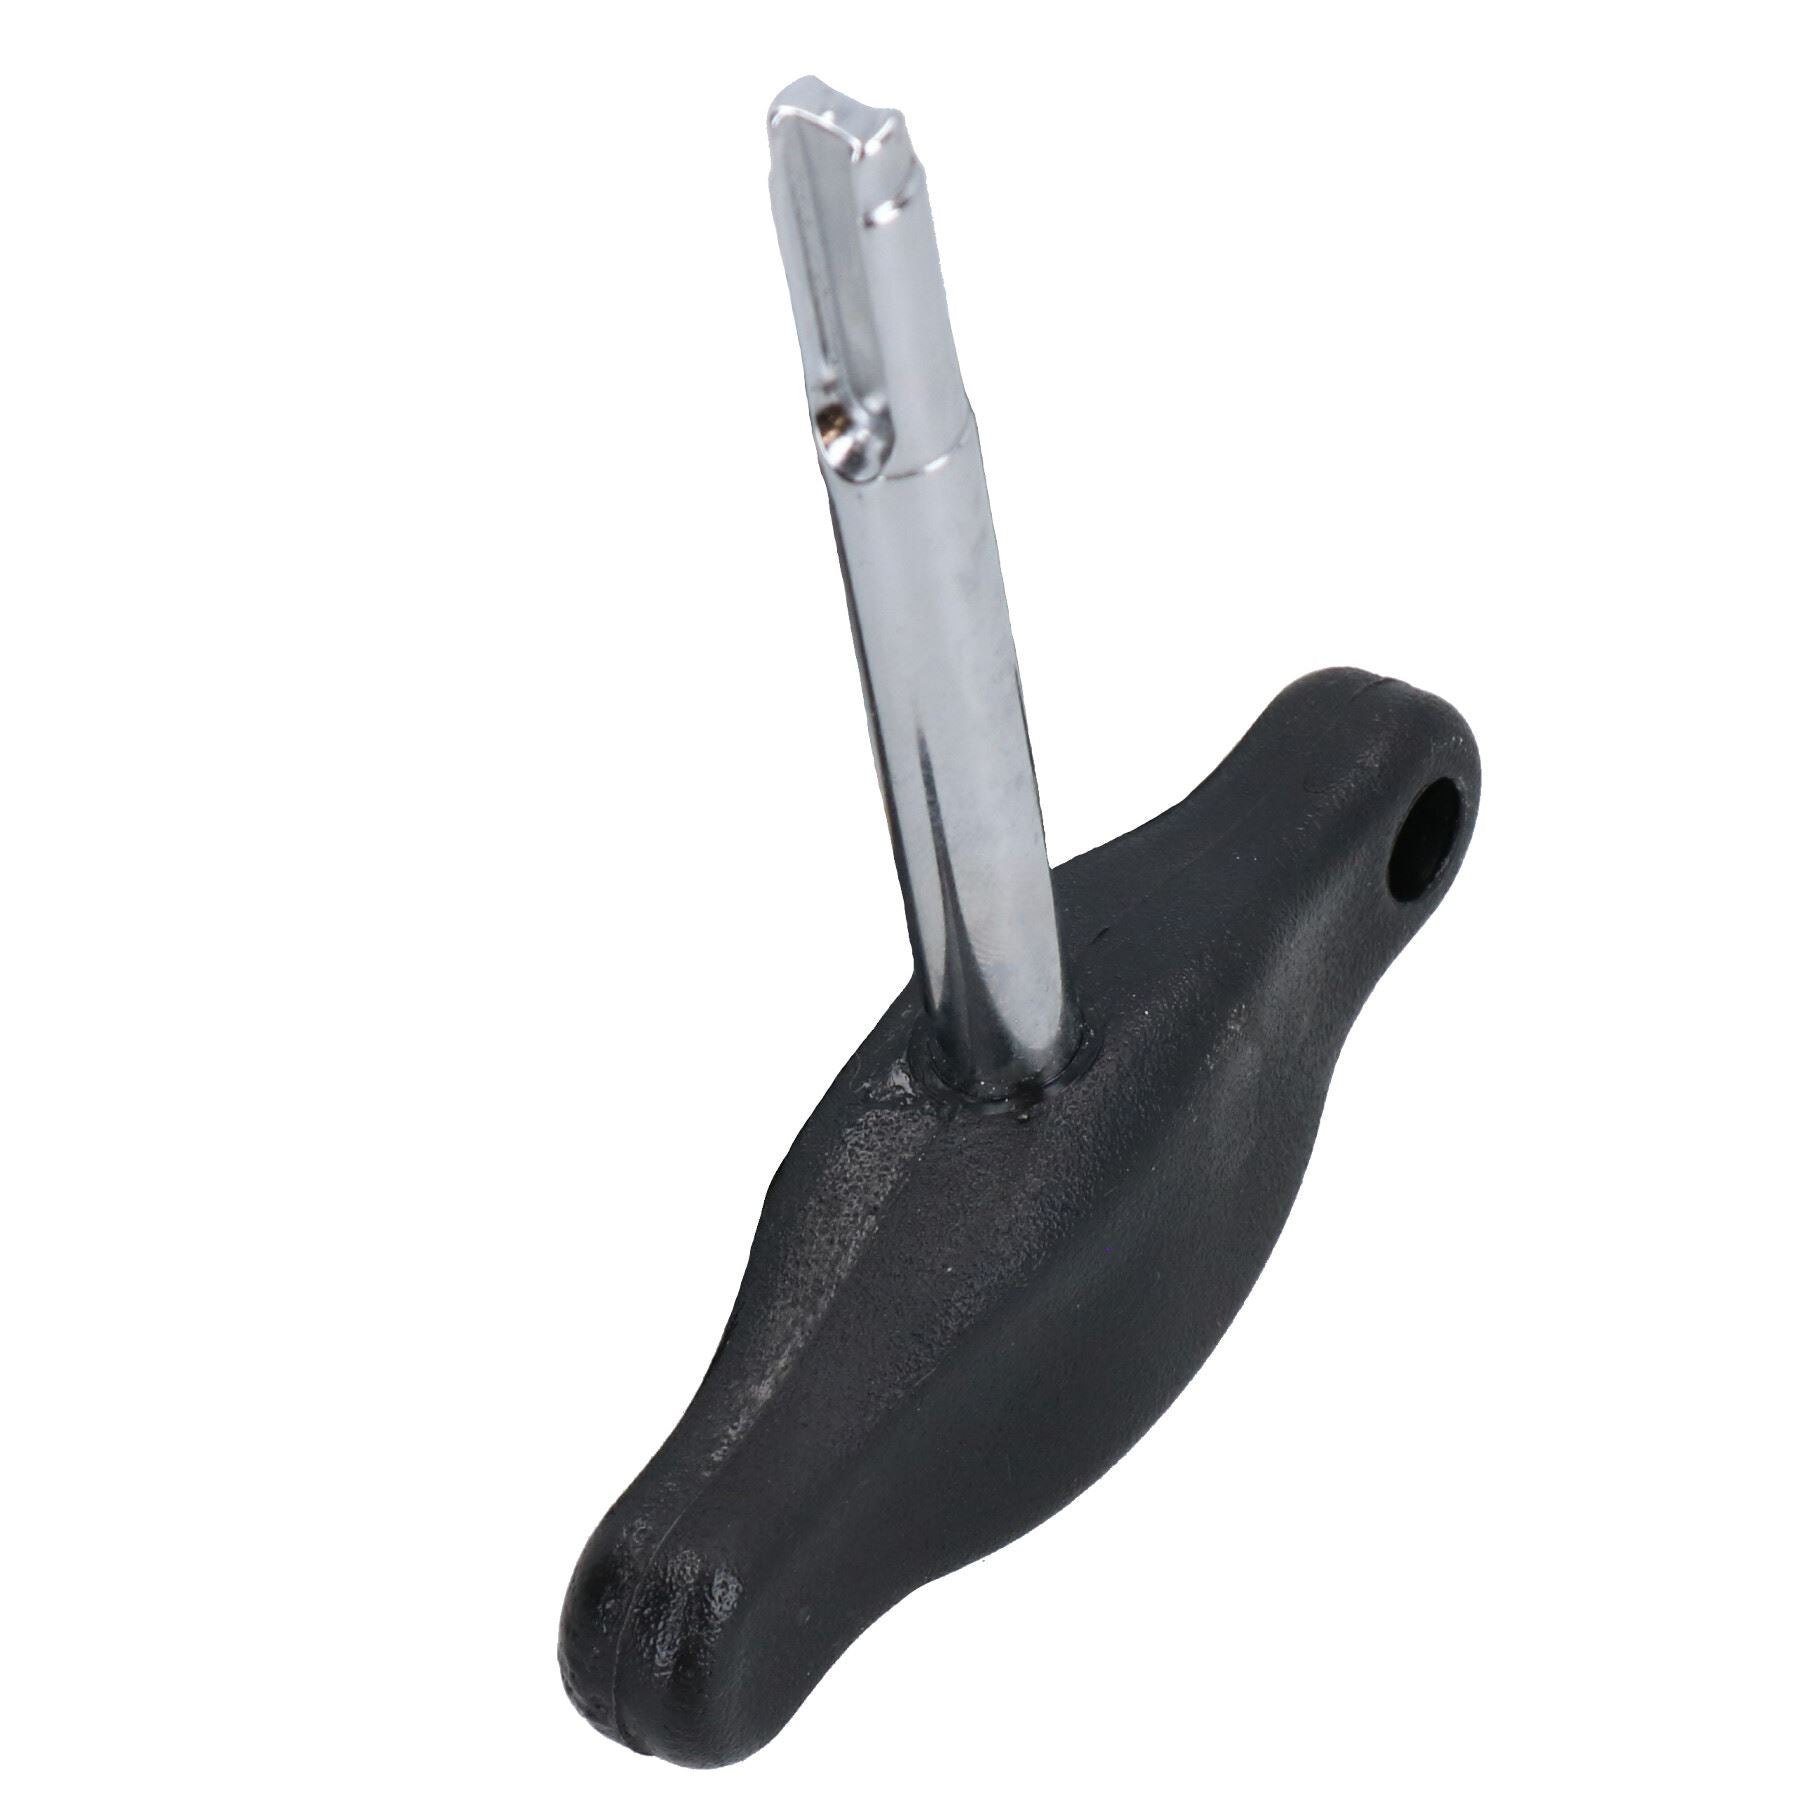 Oil Drain Plug Wrench Key T Bar For Plastic Oil Pans Use on VAG Audi Vehicles